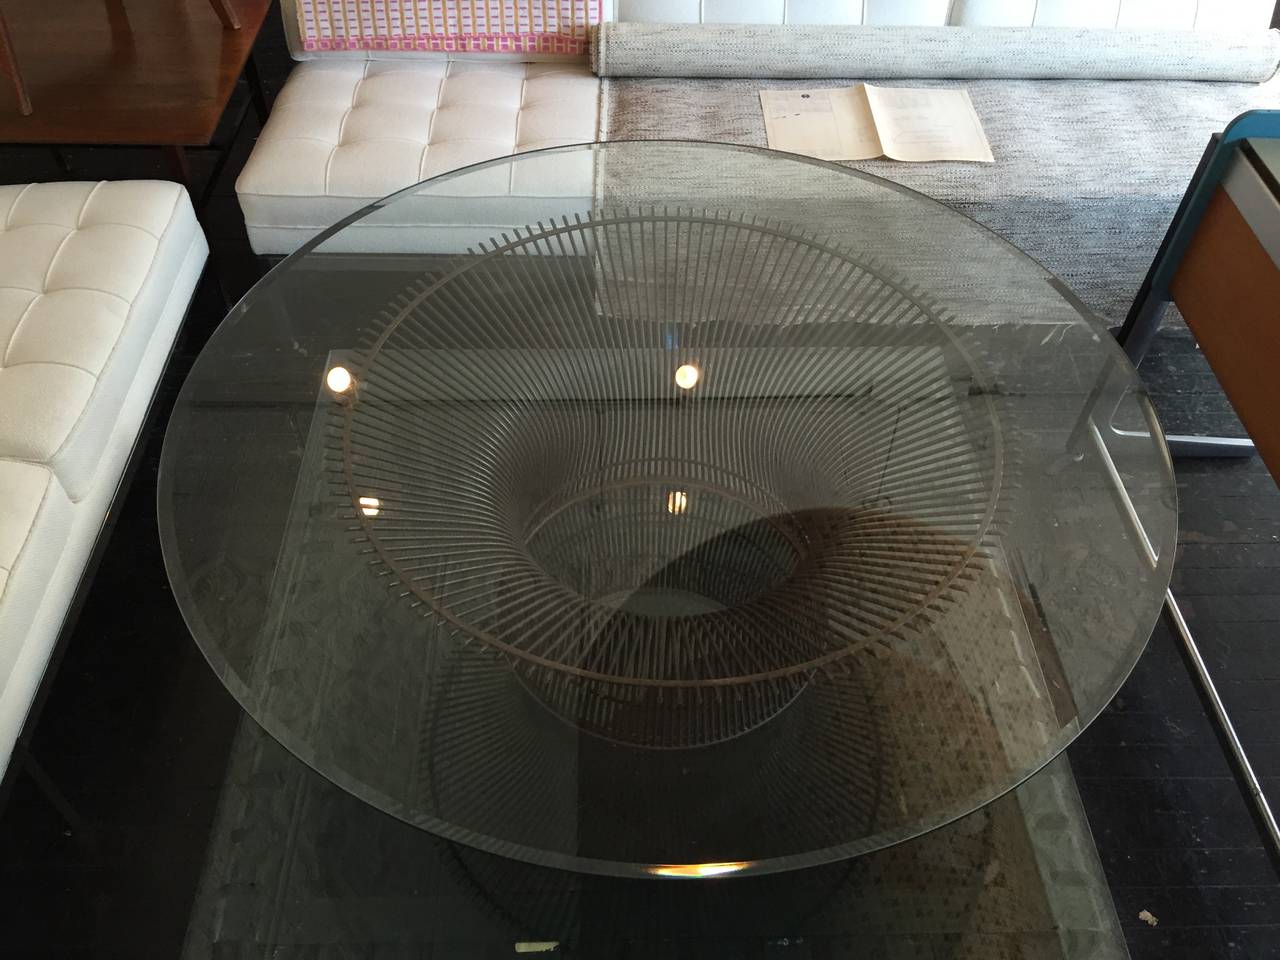 A 42 in. diameter bronze coffee table designed by Warren Platner for Knoll in 1966.